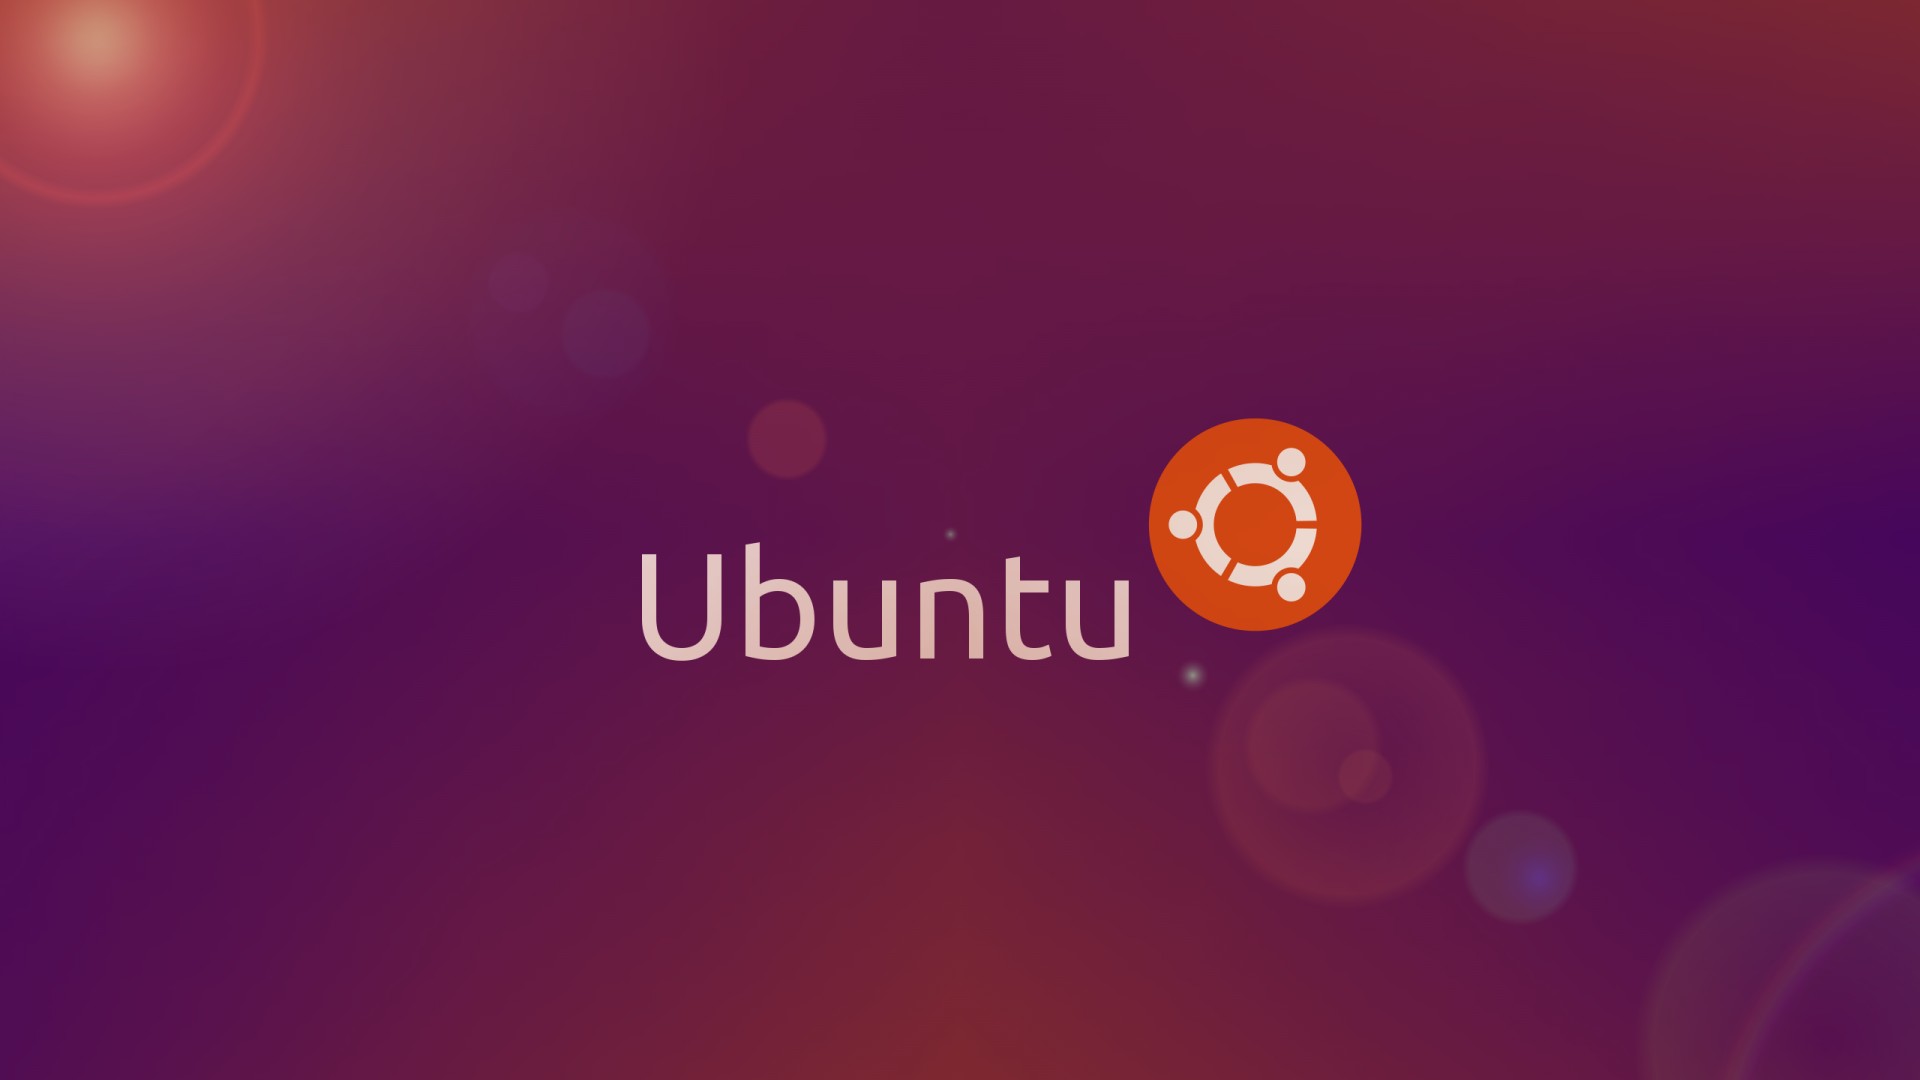 Mise à jour Ubuntu 14.10 vers 15.04